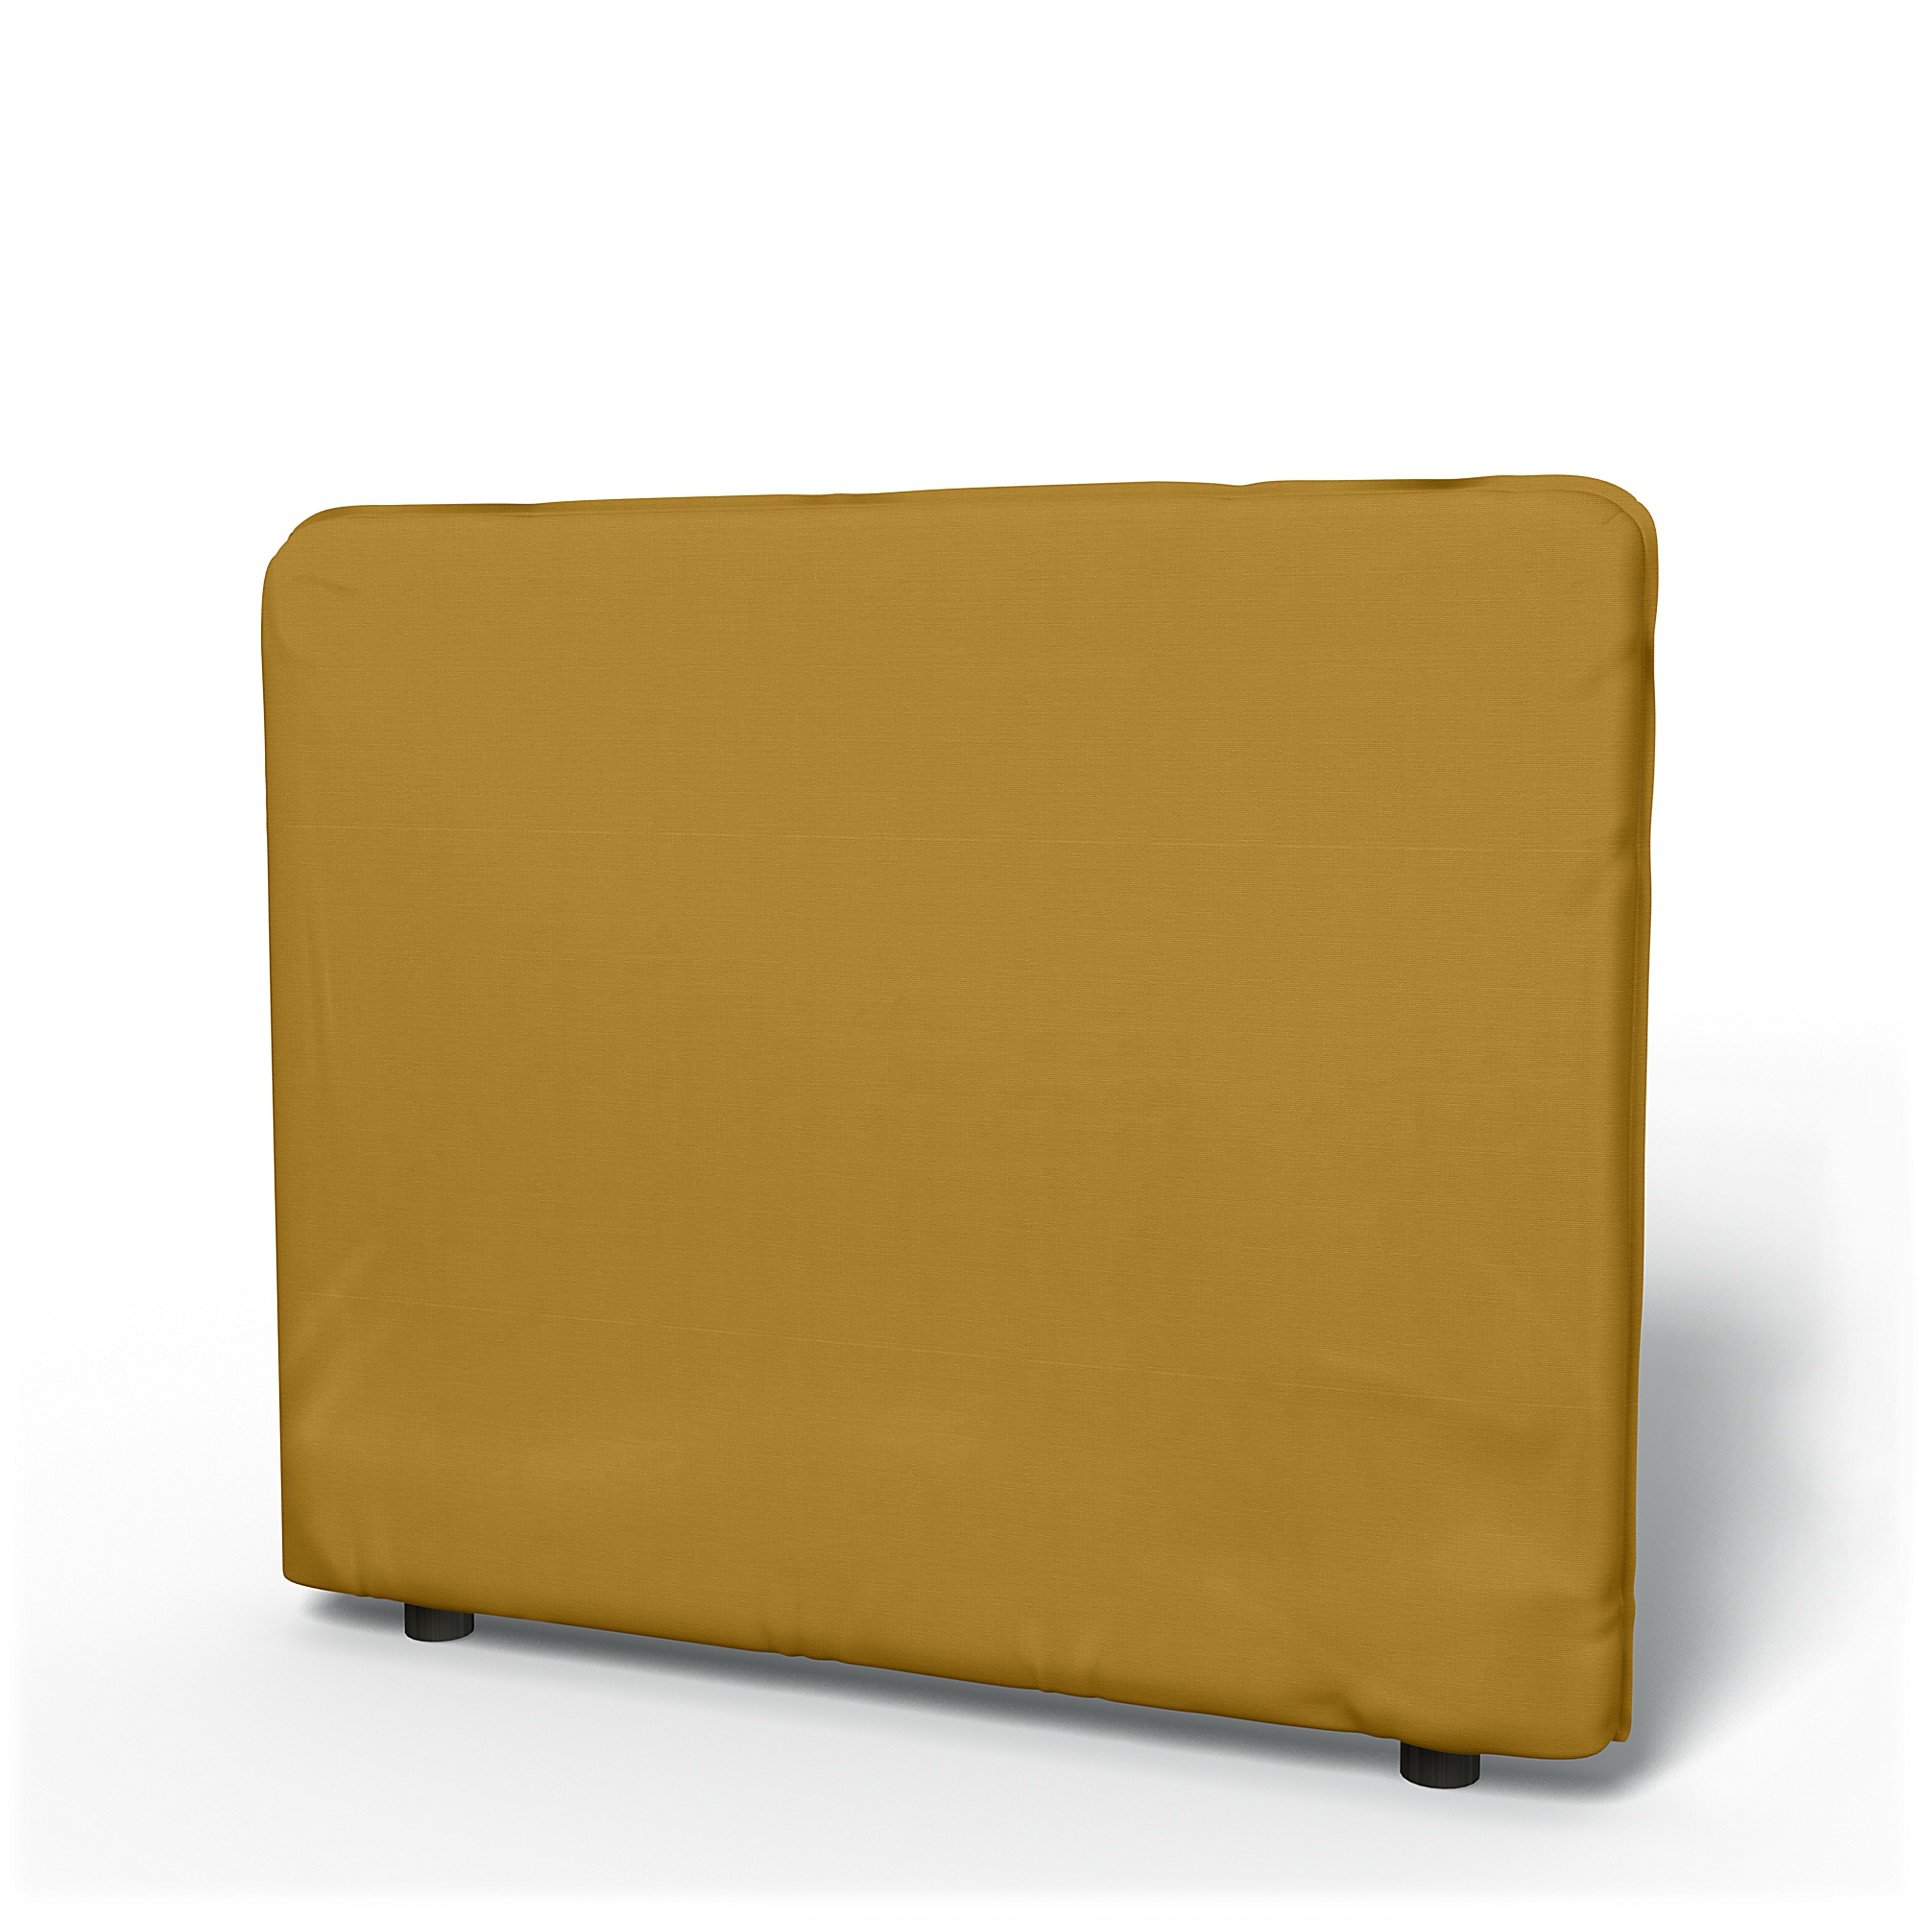 IKEA - Vallentuna Low Backrest Cover 100x80cm 39x32in, Honey Mustard, Cotton - Bemz